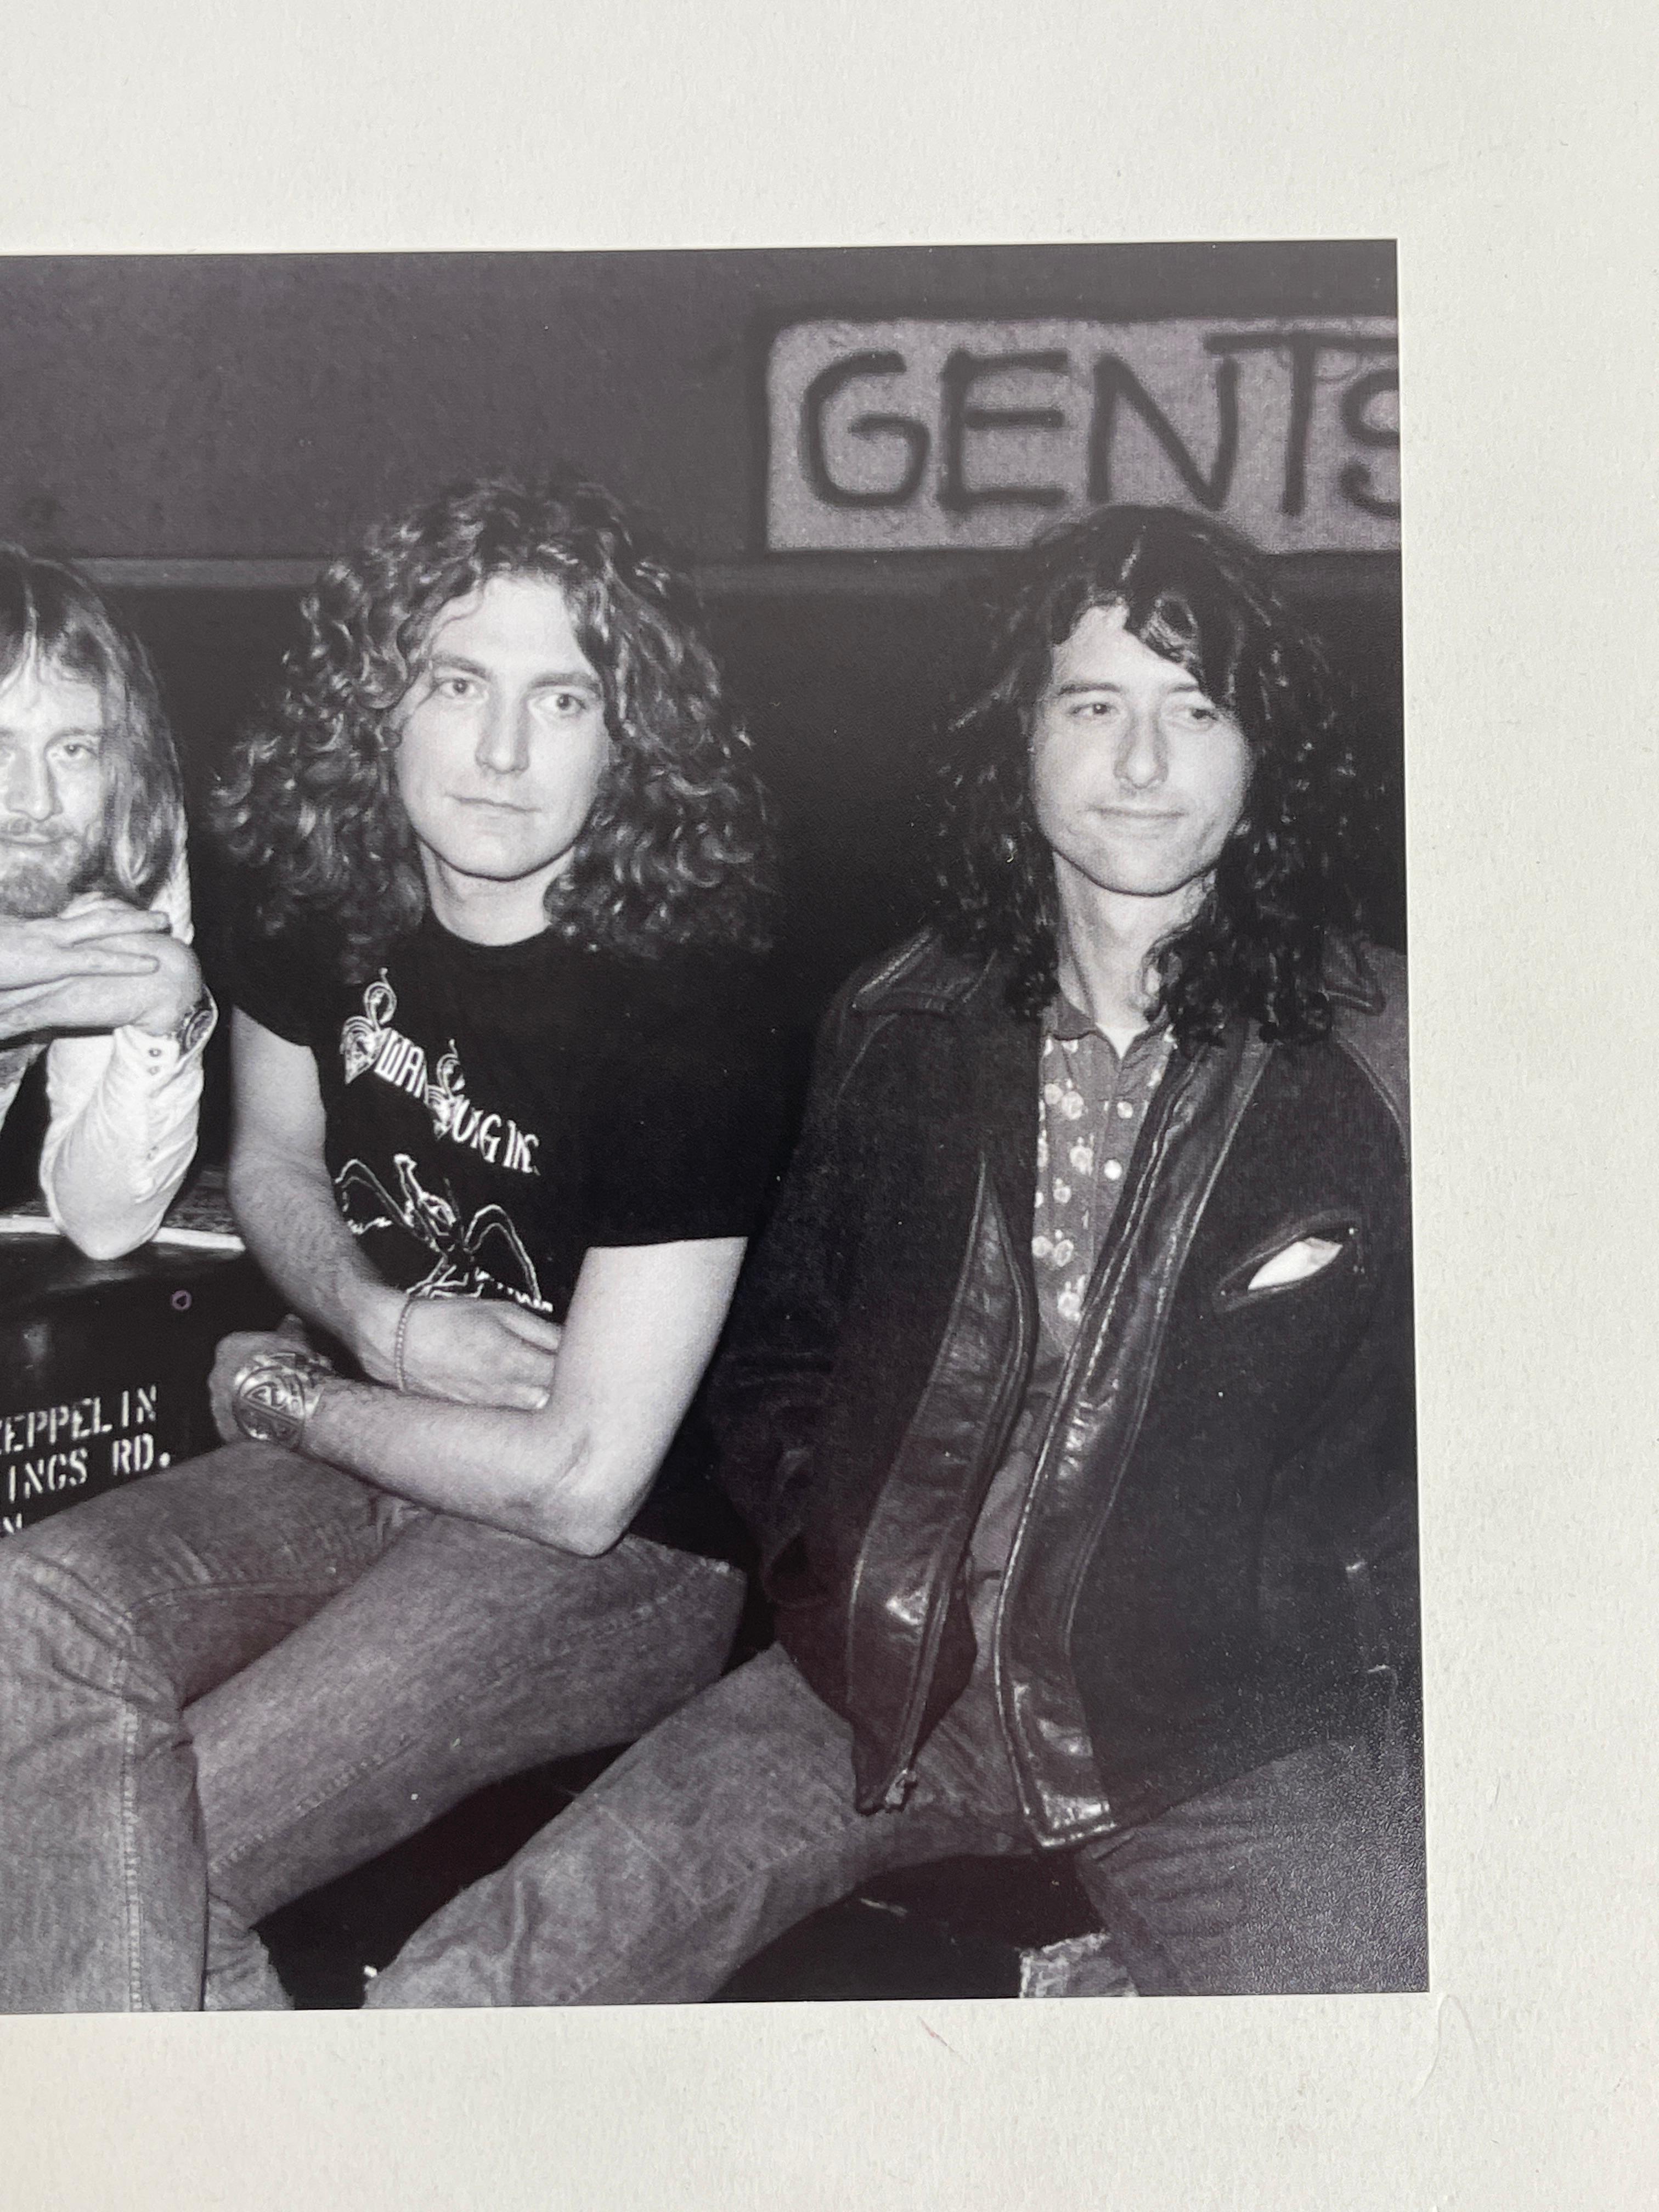 ORIGINAL PHOTOGRAPHY Led Zeppelin Drummer John Bonham,  Robert Plant, Jimmy Page, John Paul Jones